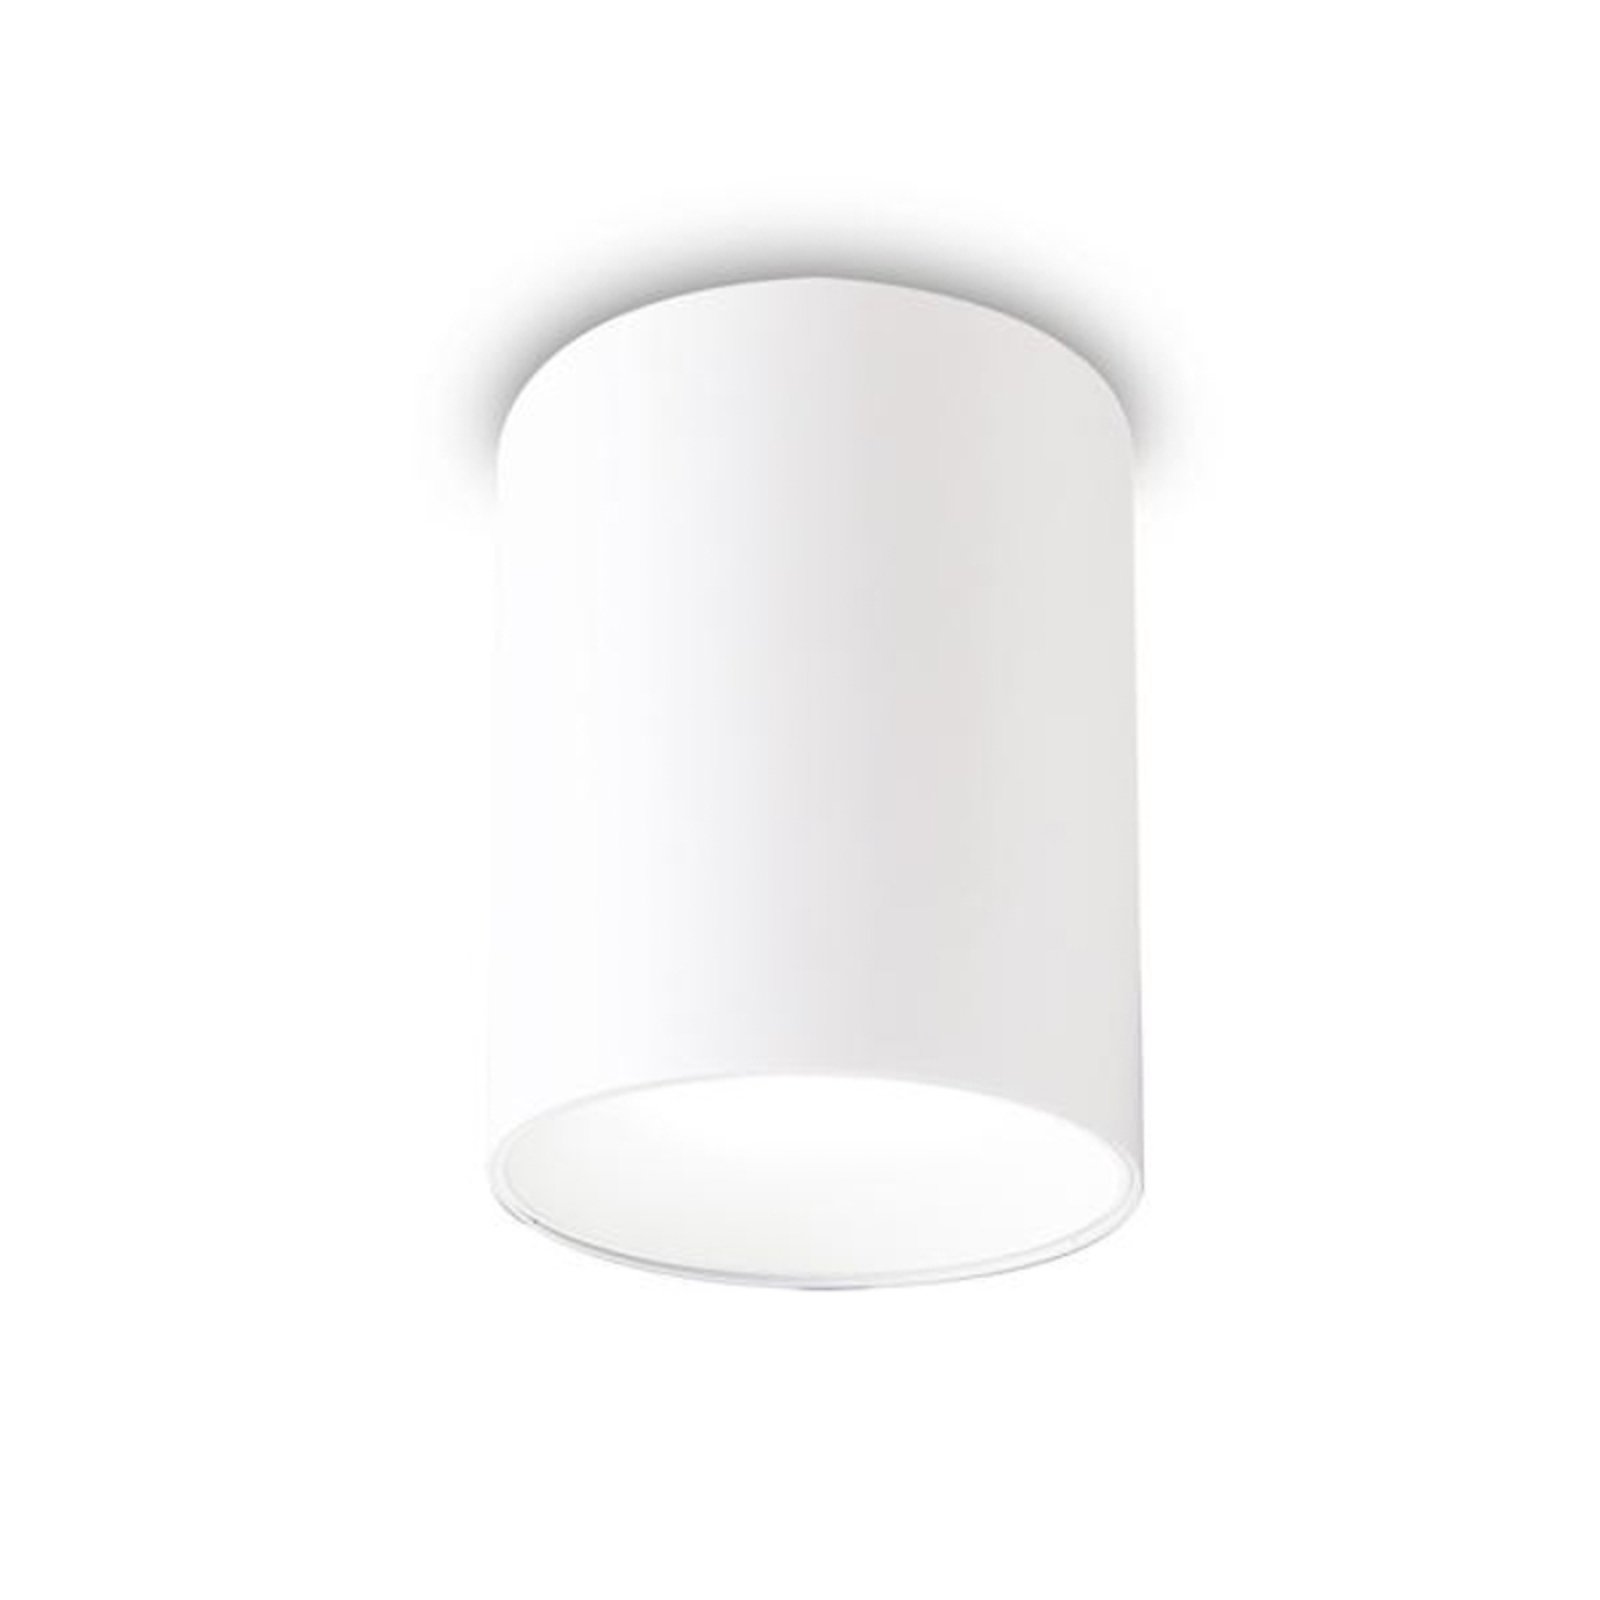 Ideal Lux LED downlight Nitro Round white height 14.2 cm metal